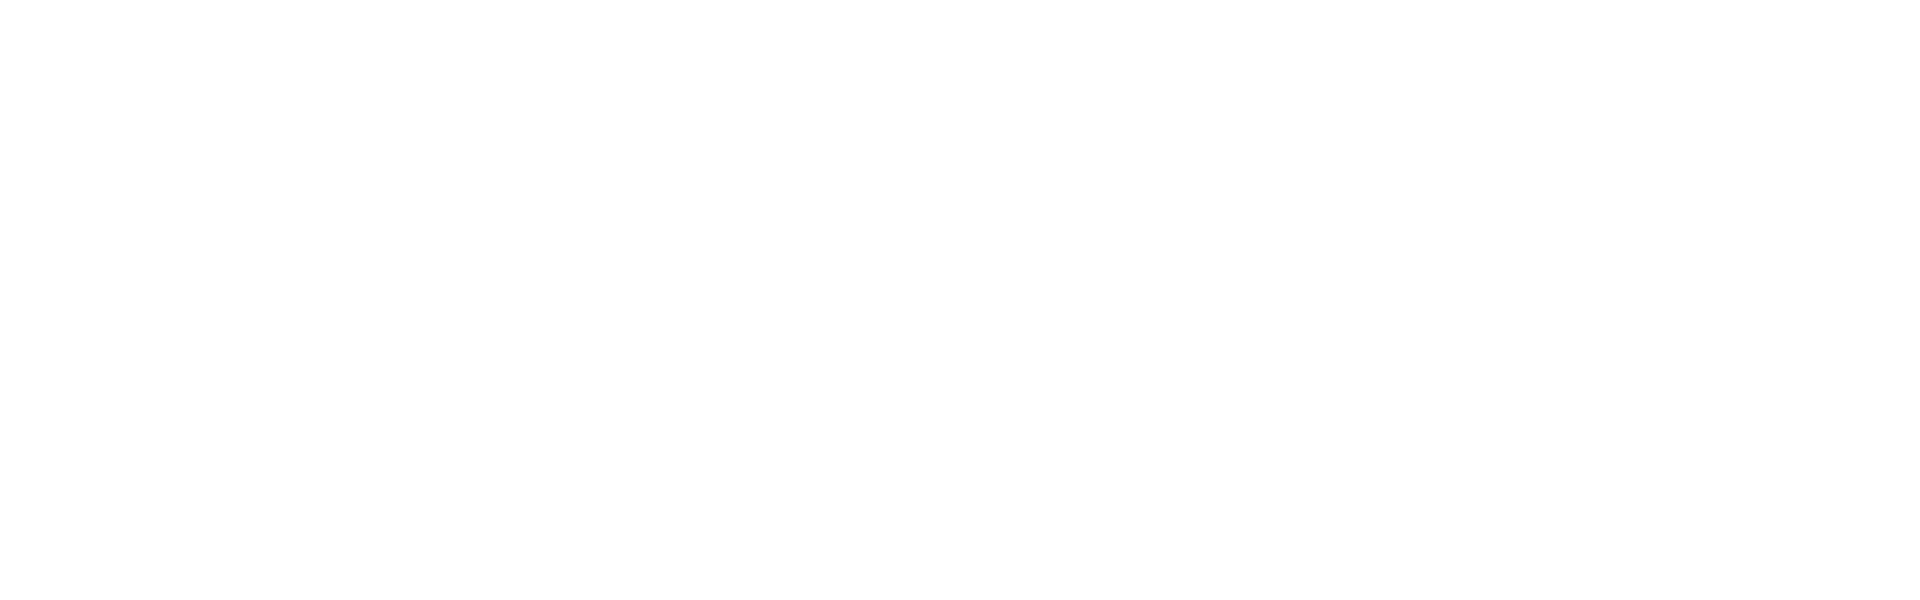 Характеристики слоев, «-Брик», форма «Слим», 200 мл с трубочкой, таблица